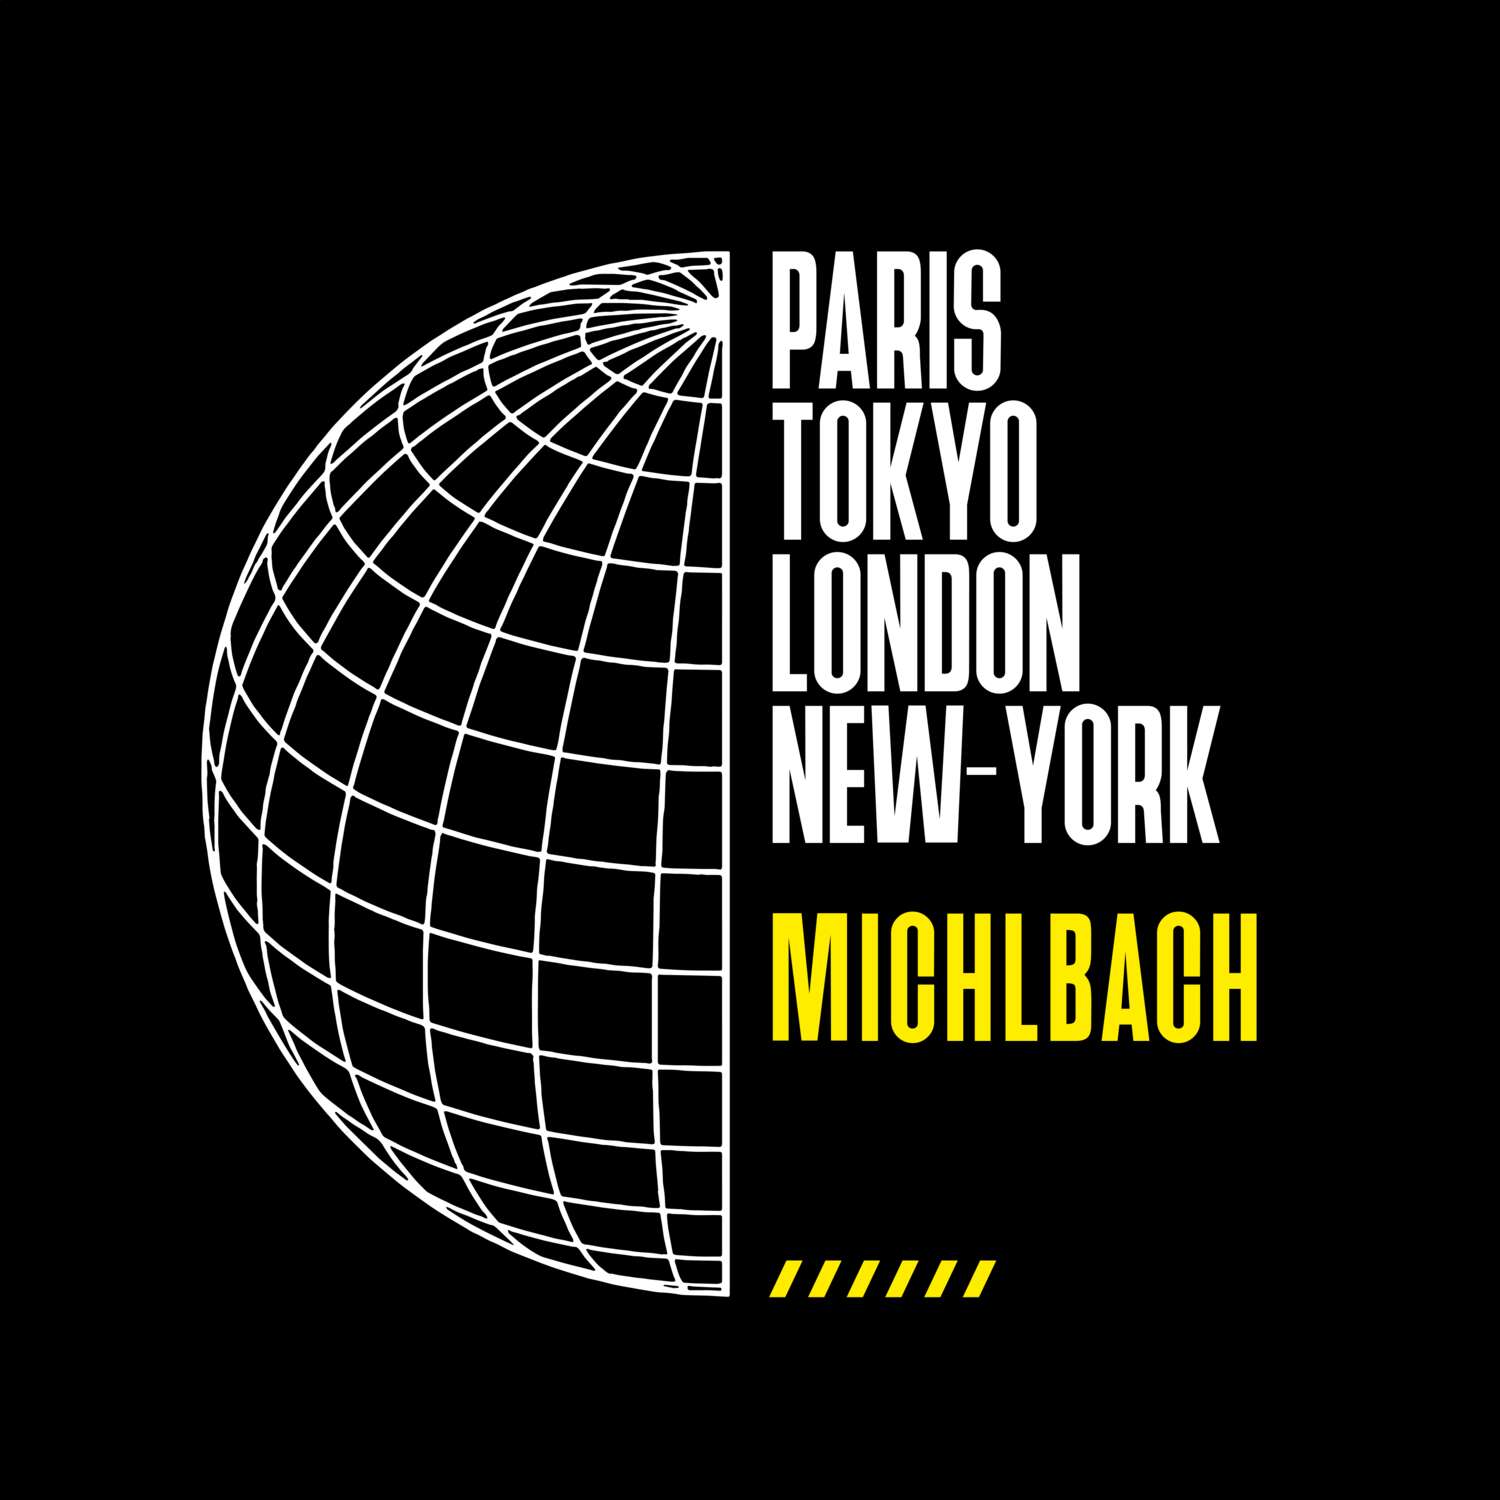 Michlbach T-Shirt »Paris Tokyo London«